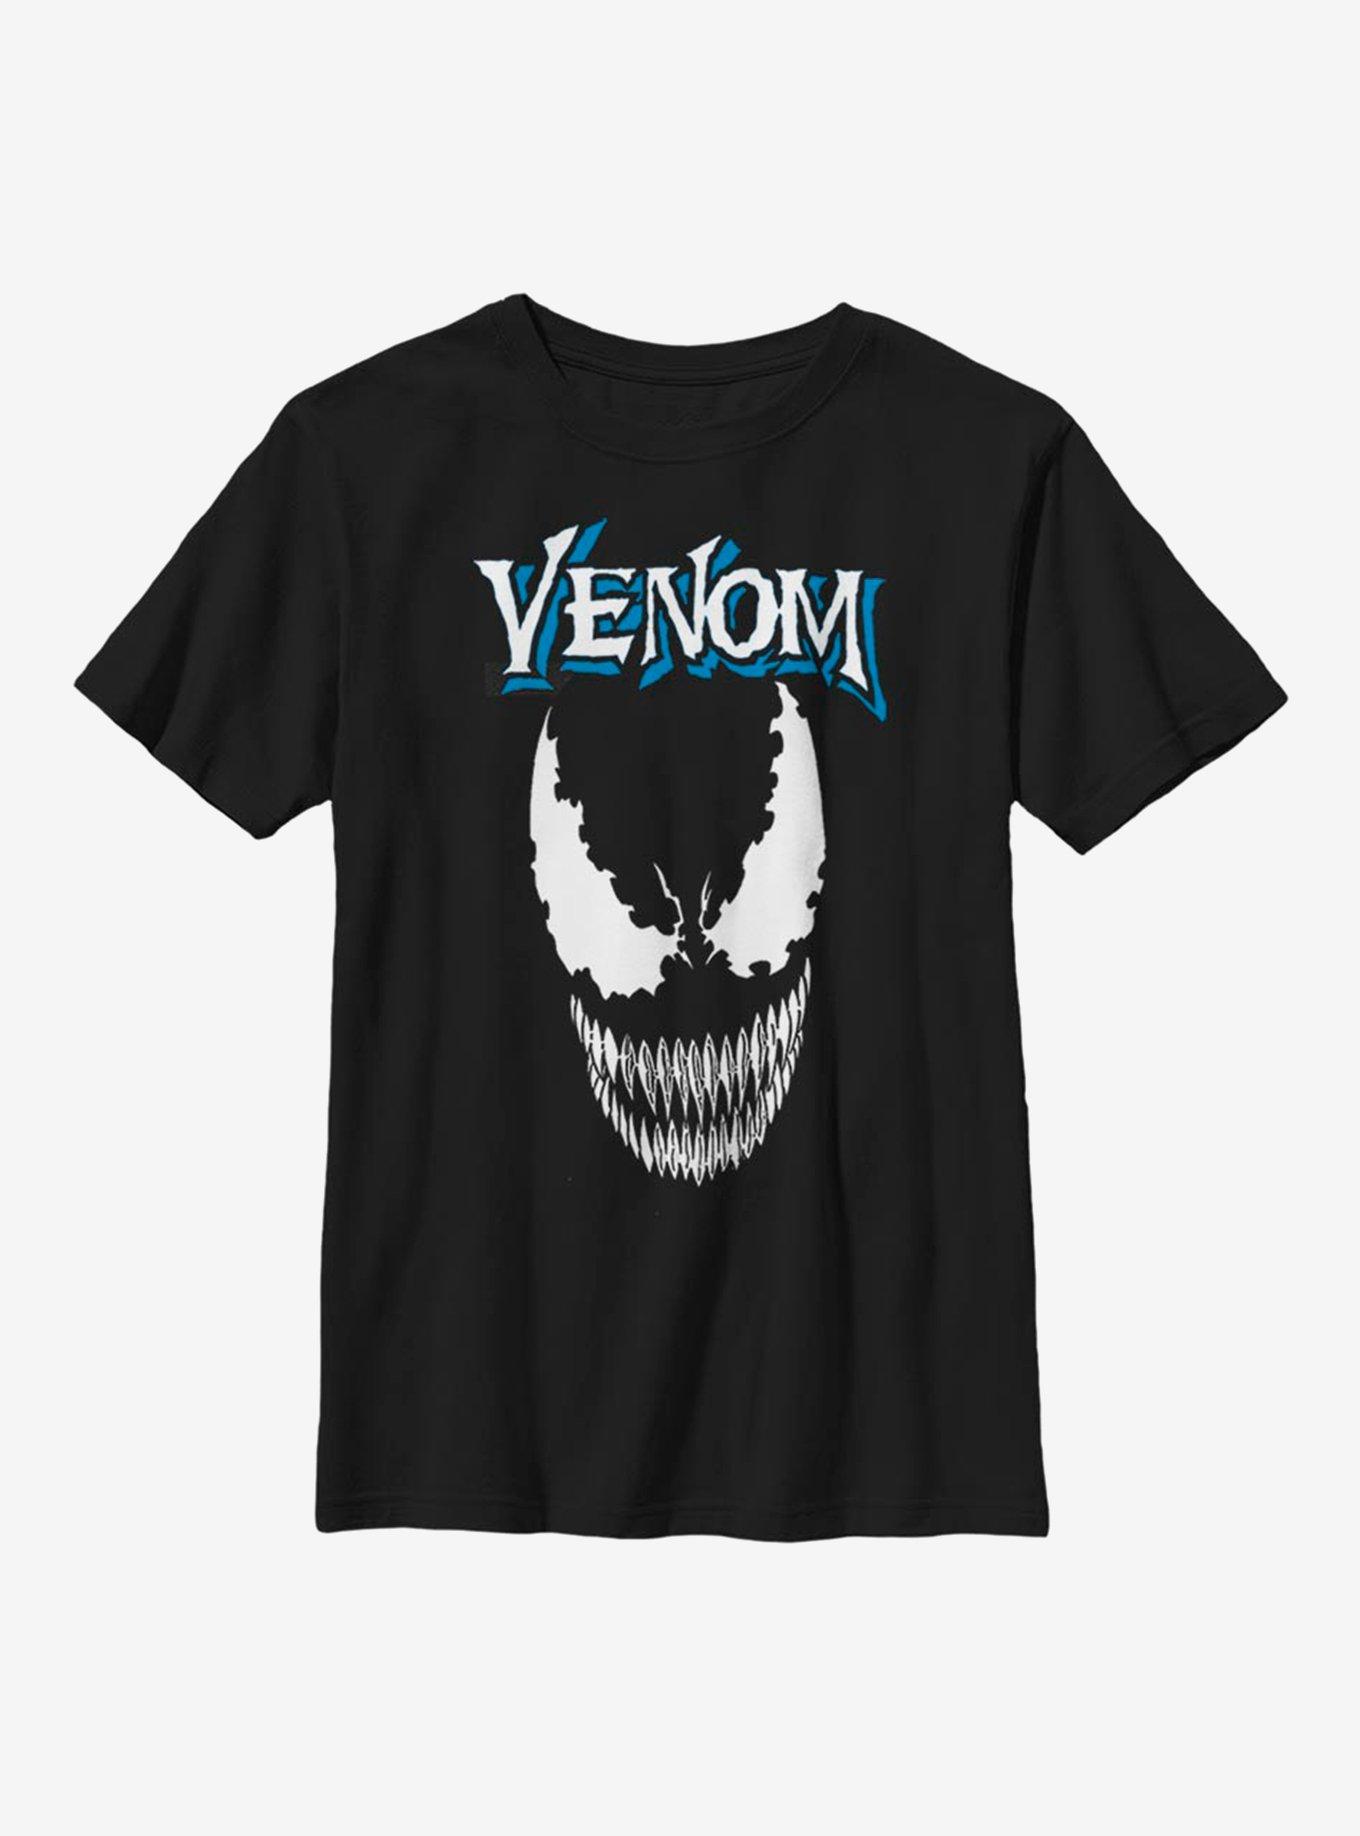 Marvel Venom Crest Youth T-Shirt, BLACK, hi-res